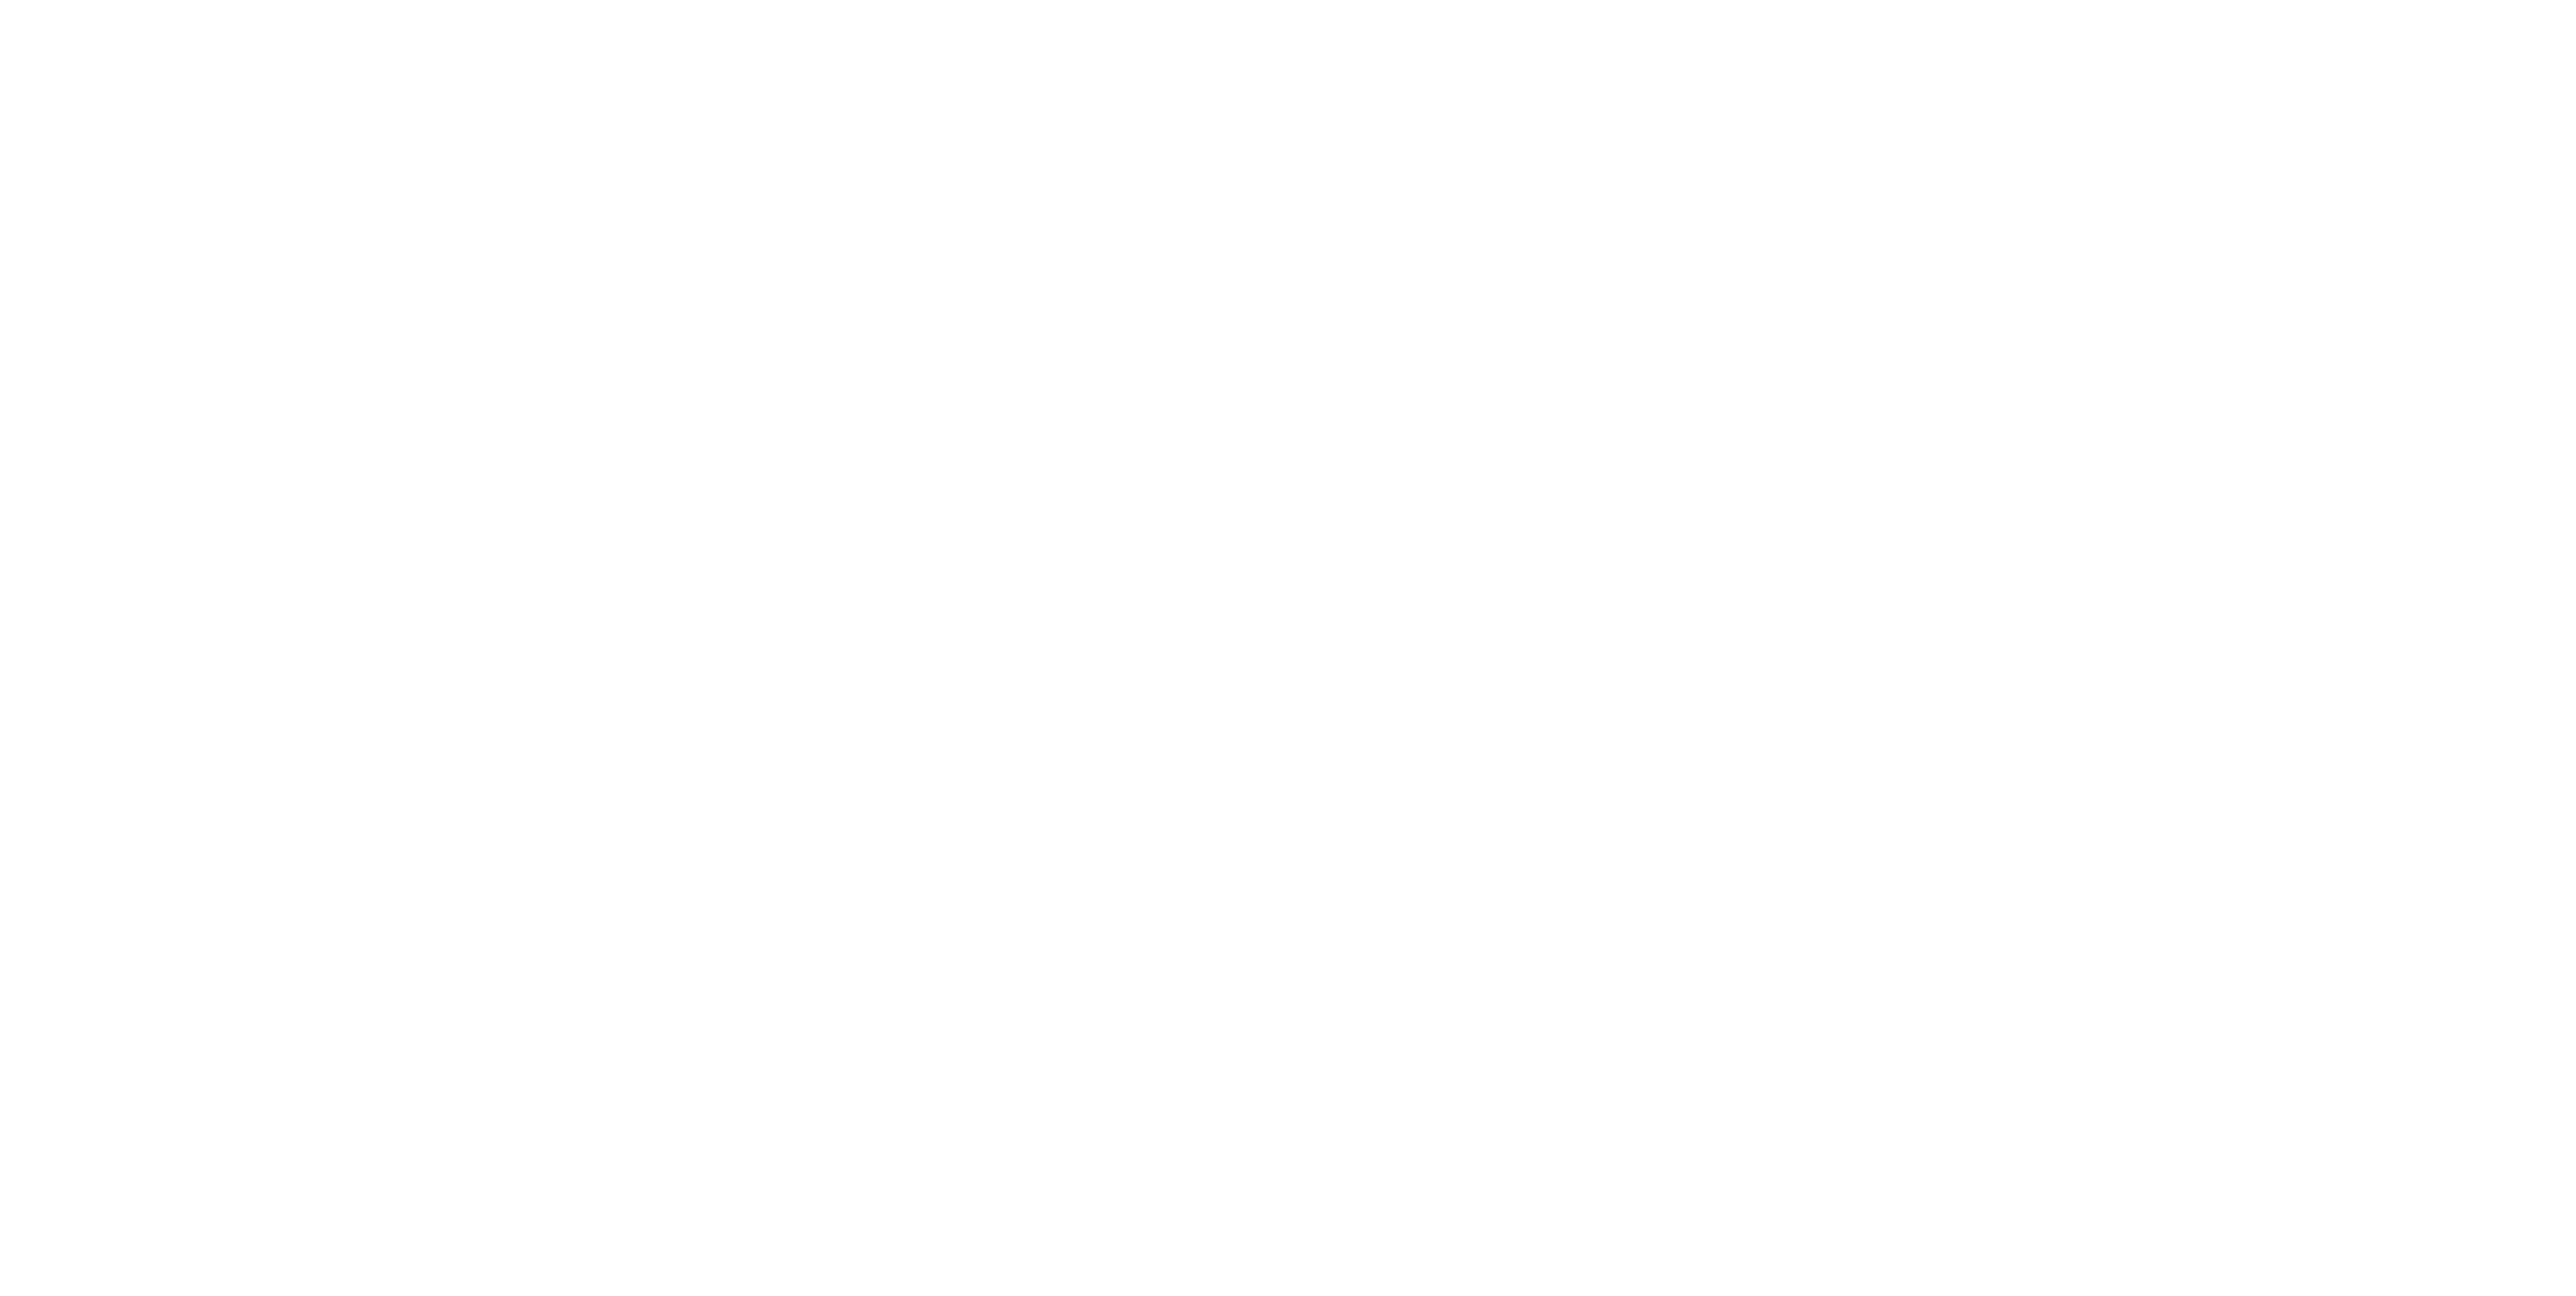 Friendly City Psychology Logo